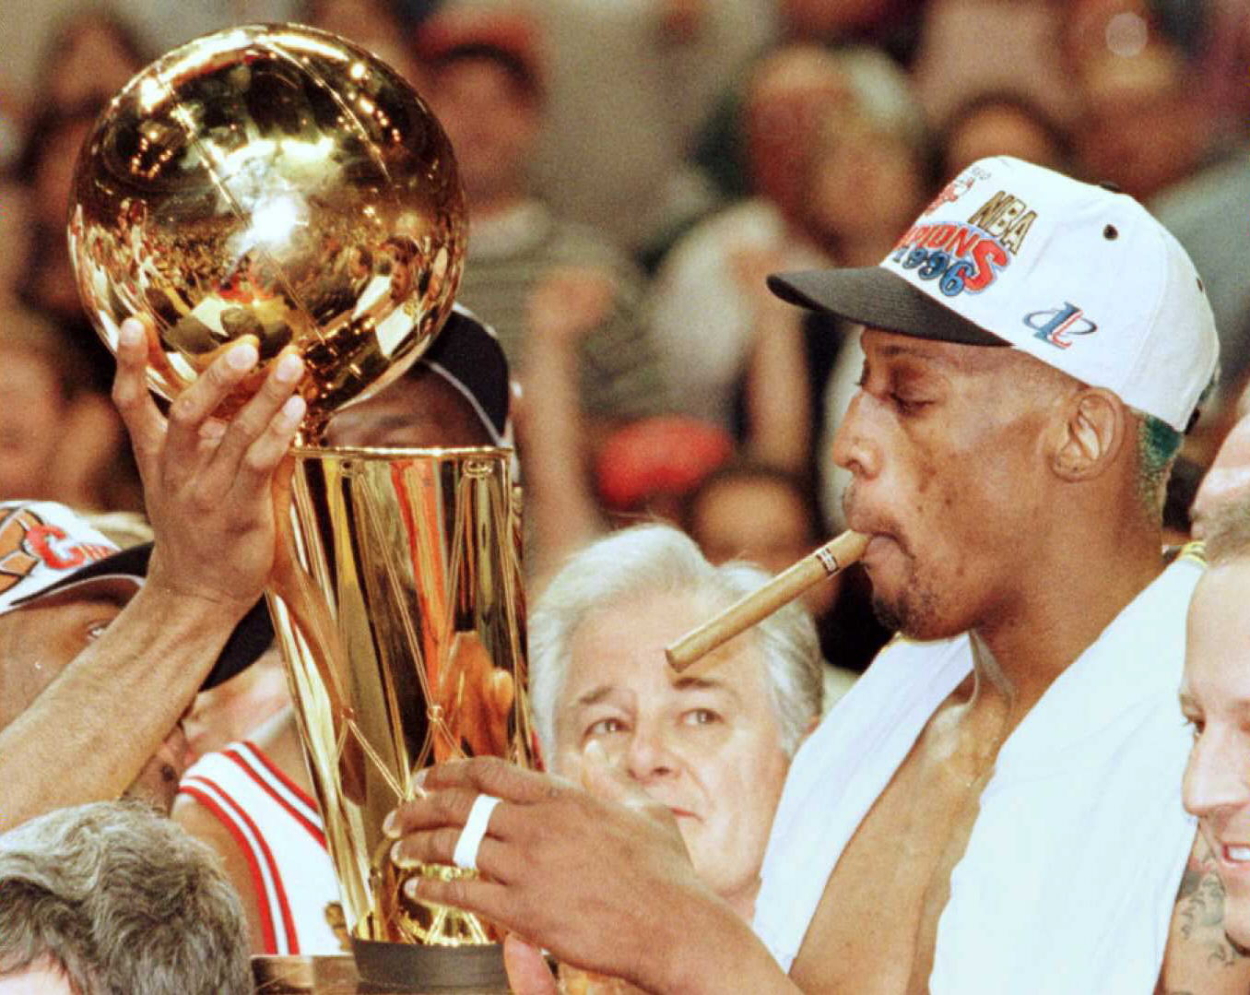 Chicago Bulls: 3 best games of Dennis Rodman's NBA career